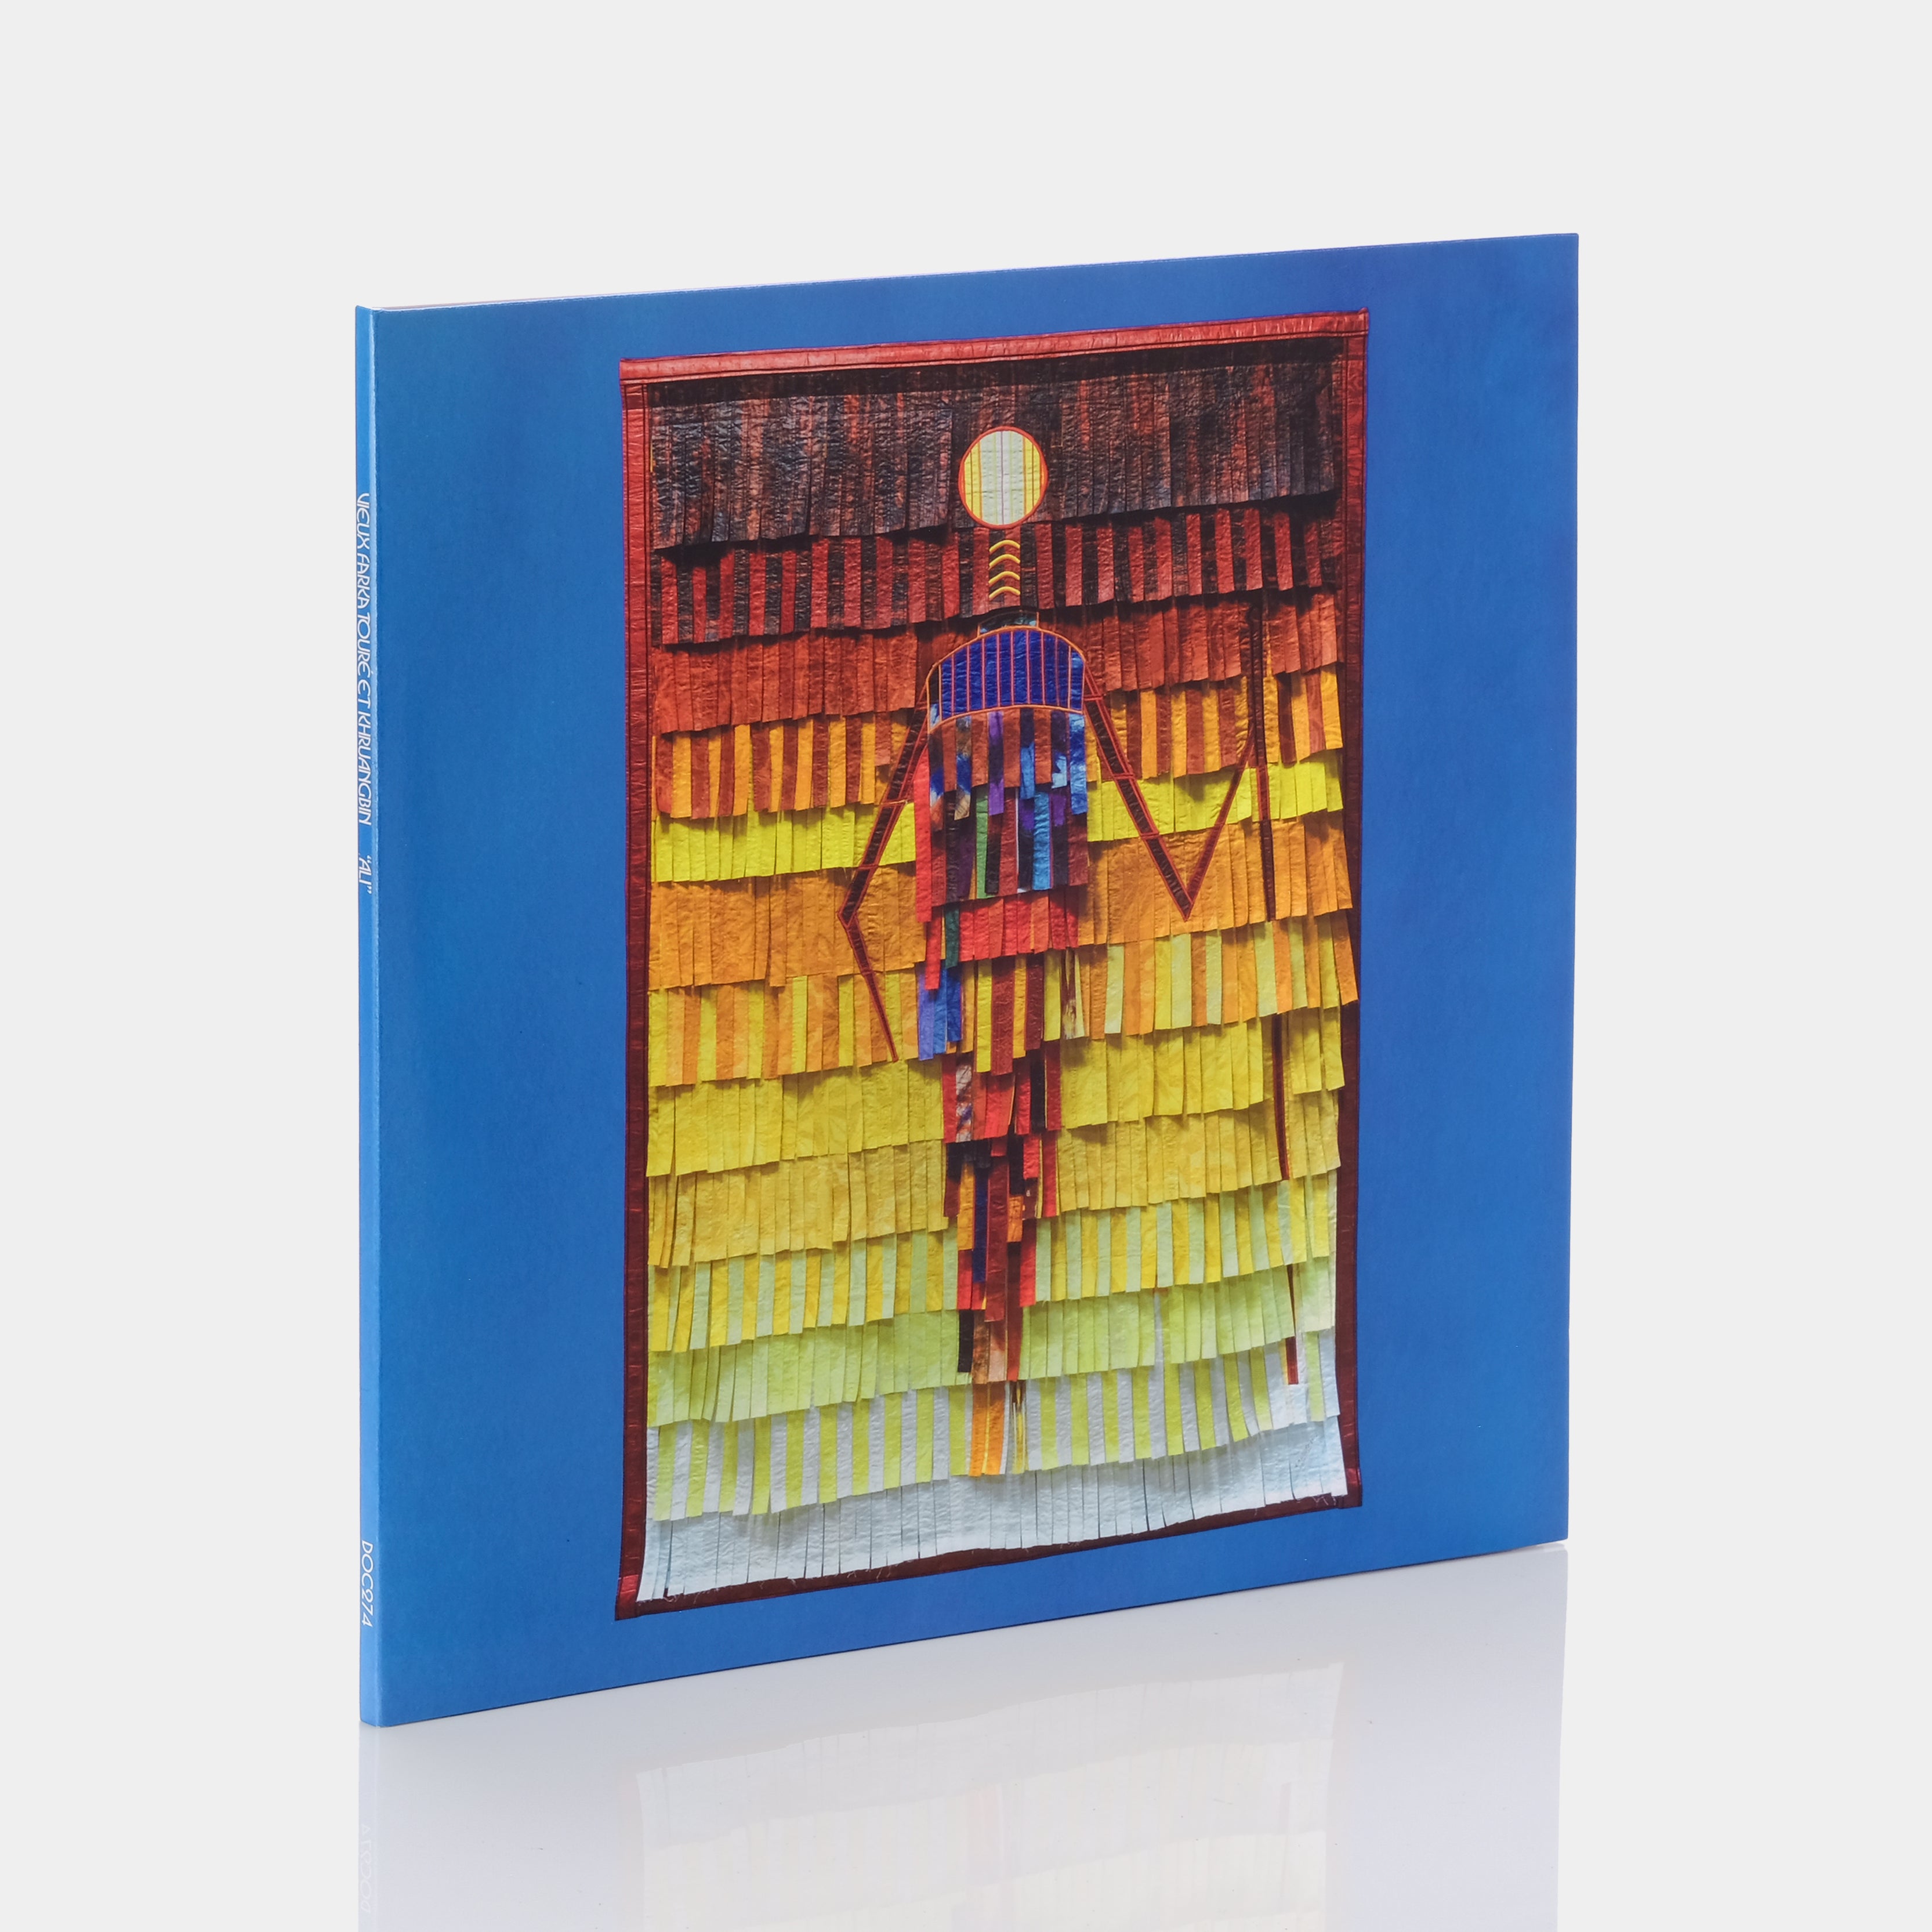 Vieux Farka Touré Et Khruangbin - Ali LP Vinyl Record